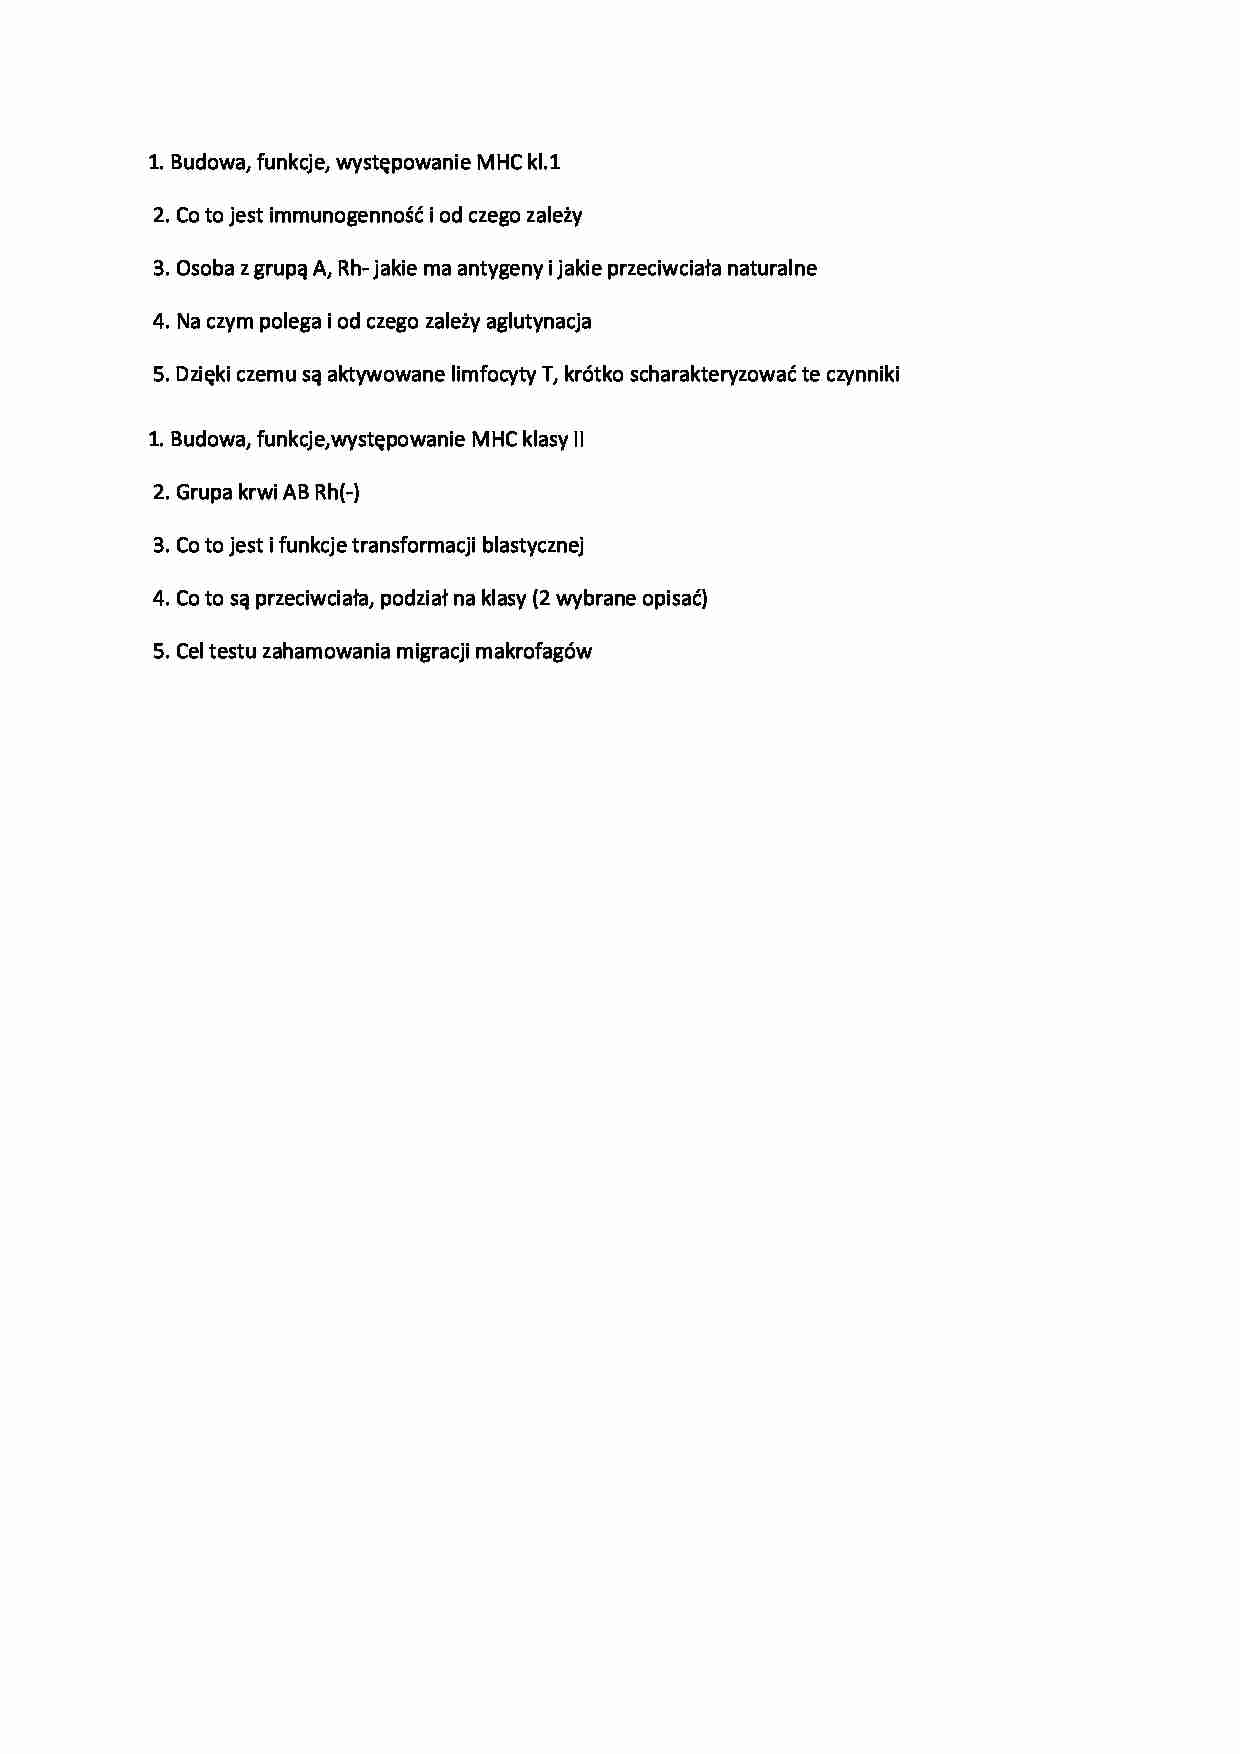 Immunologia - kolokwium - strona 1